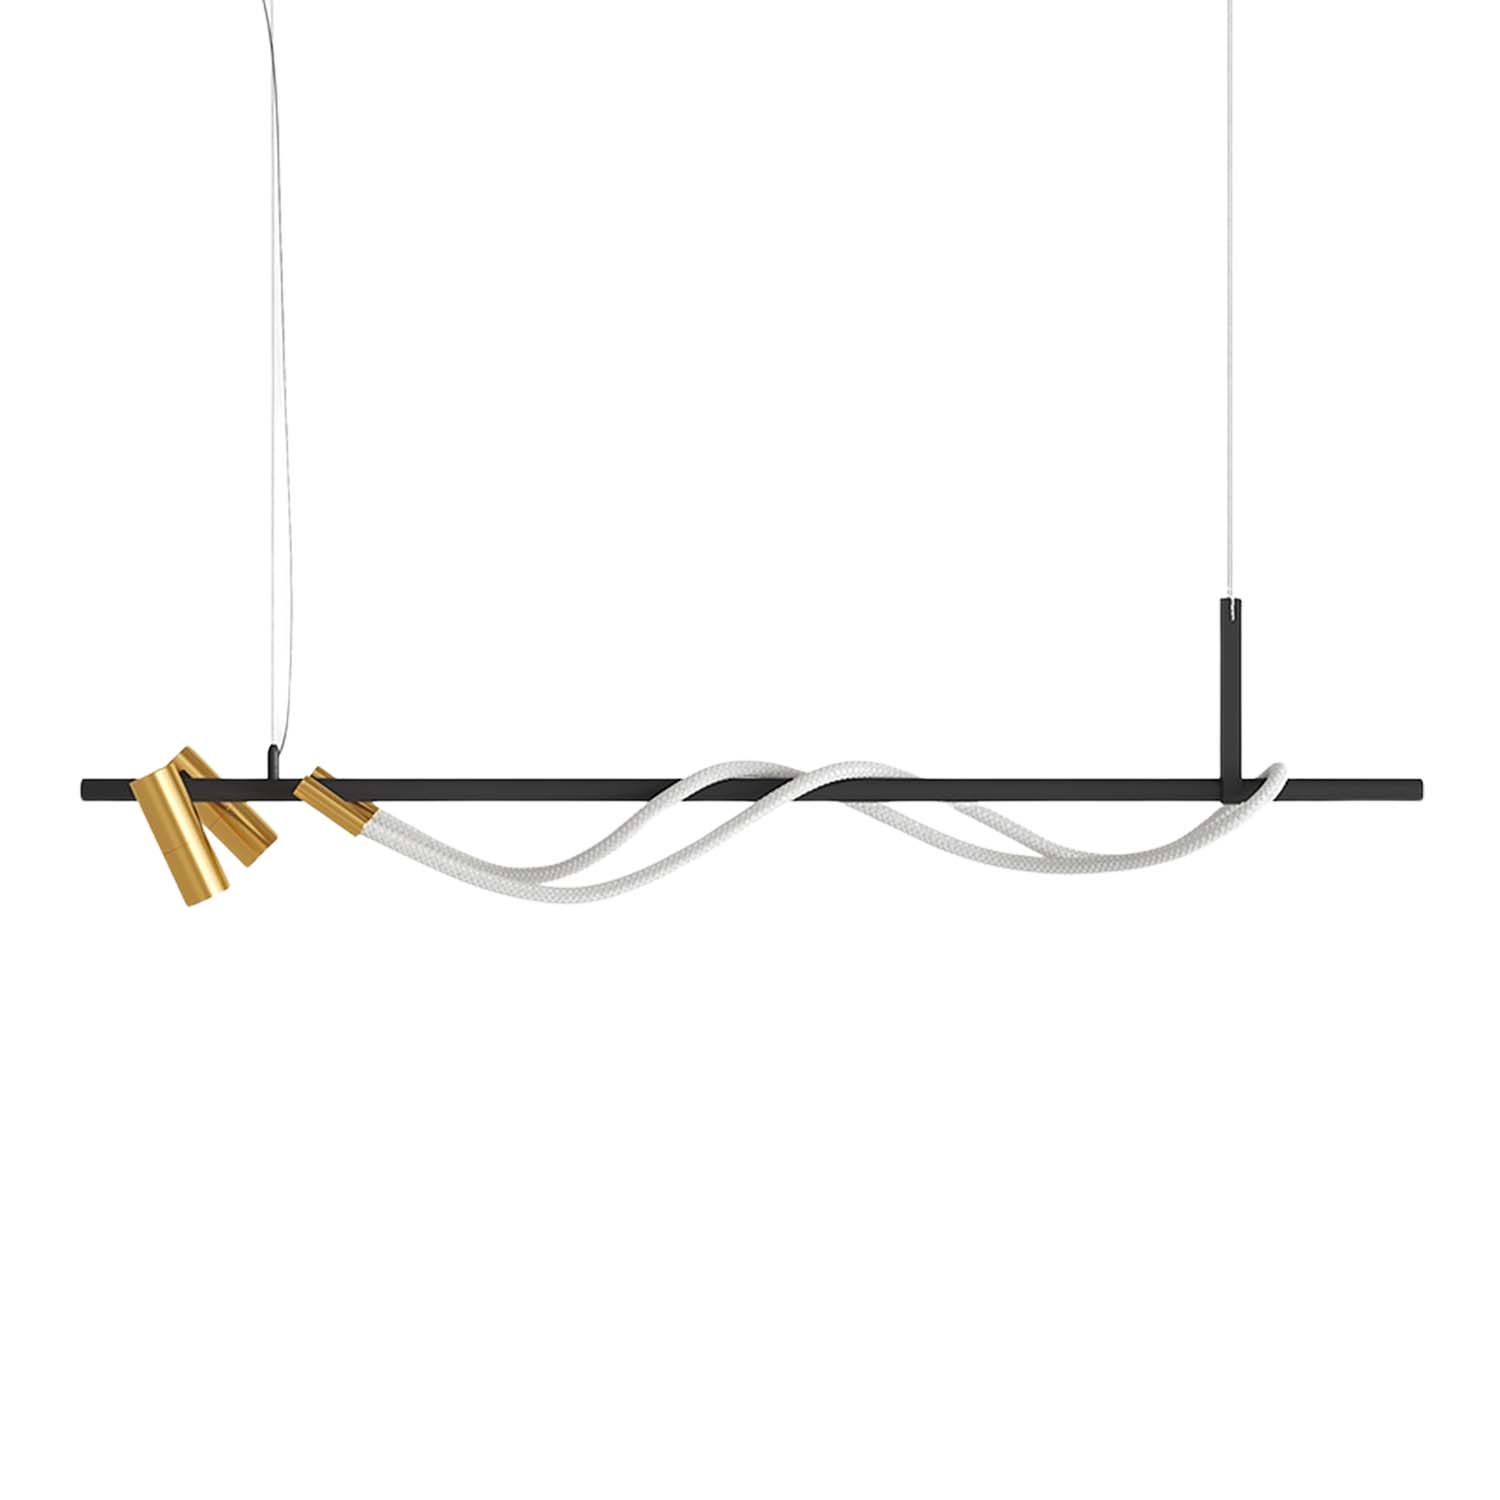 TAU - Integrated flexible LED tube suspension, black and gold design